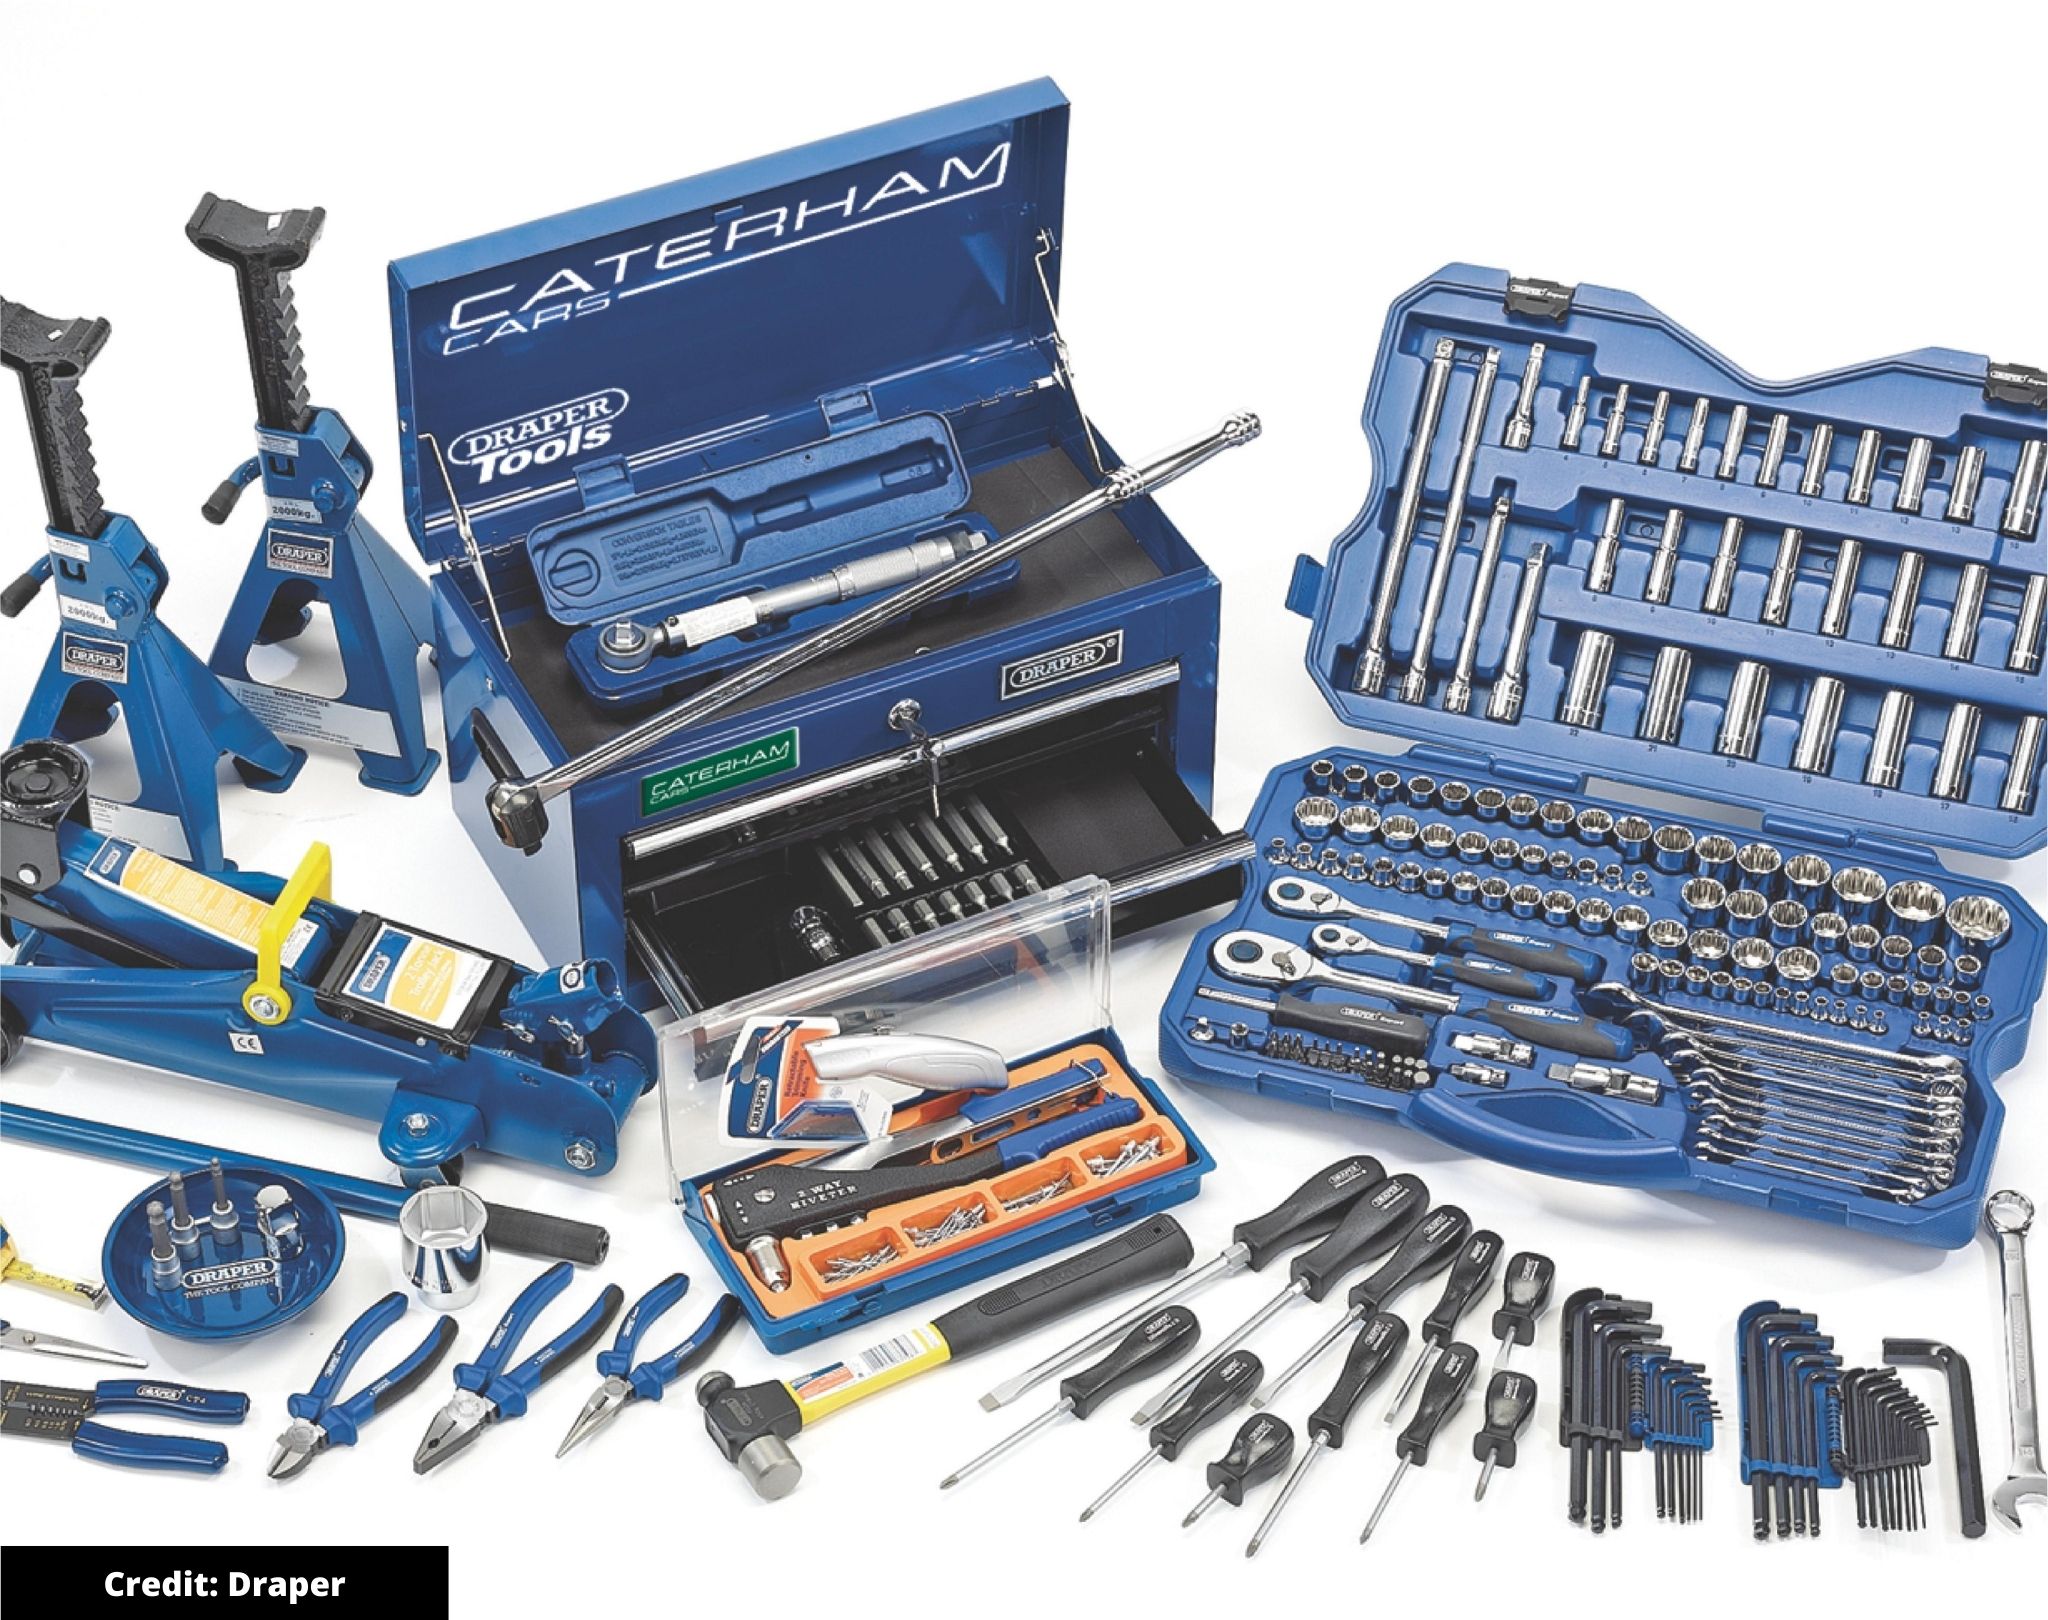 Caterham vehicle tool set